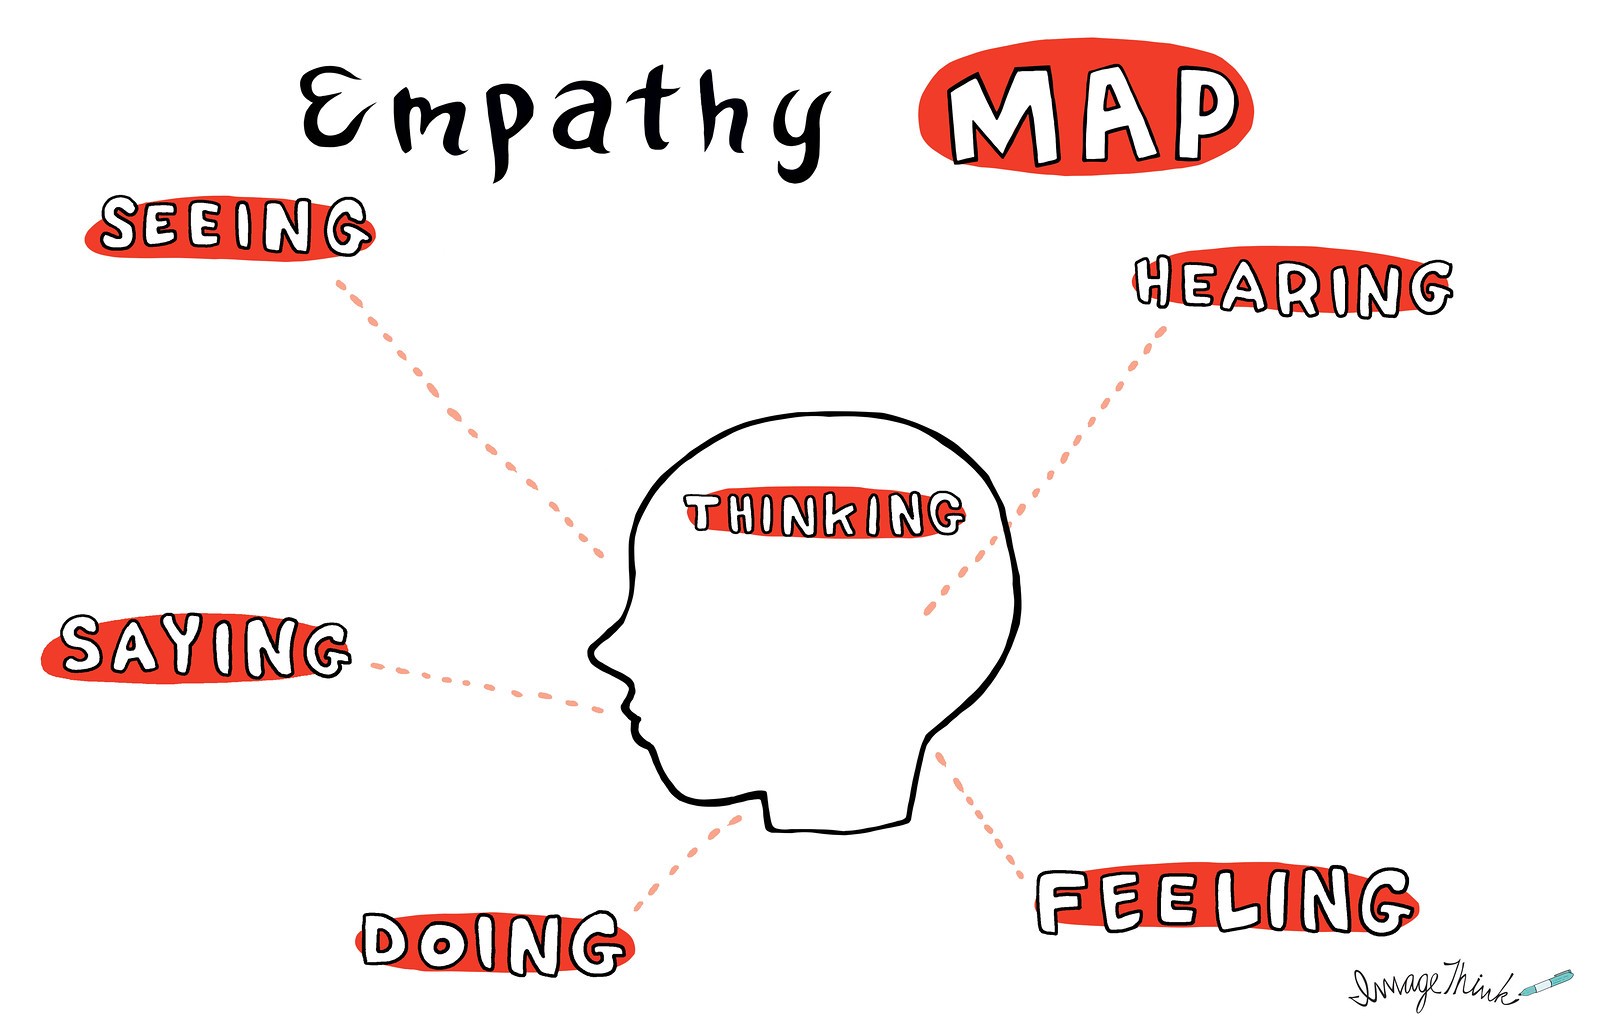 Empathy Map Example